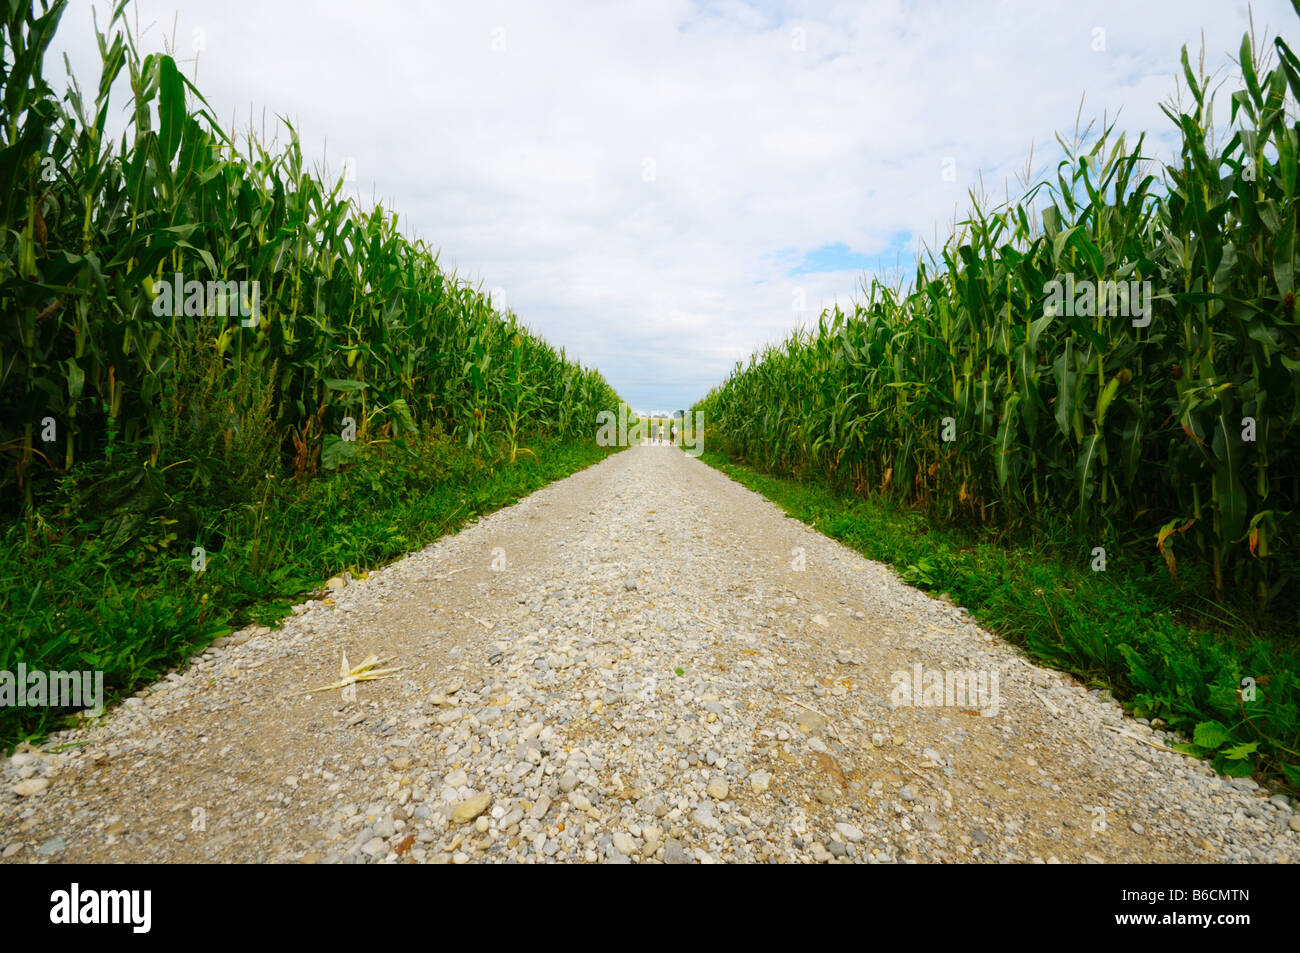 Indian corn crop in field, Germany Stock Photo